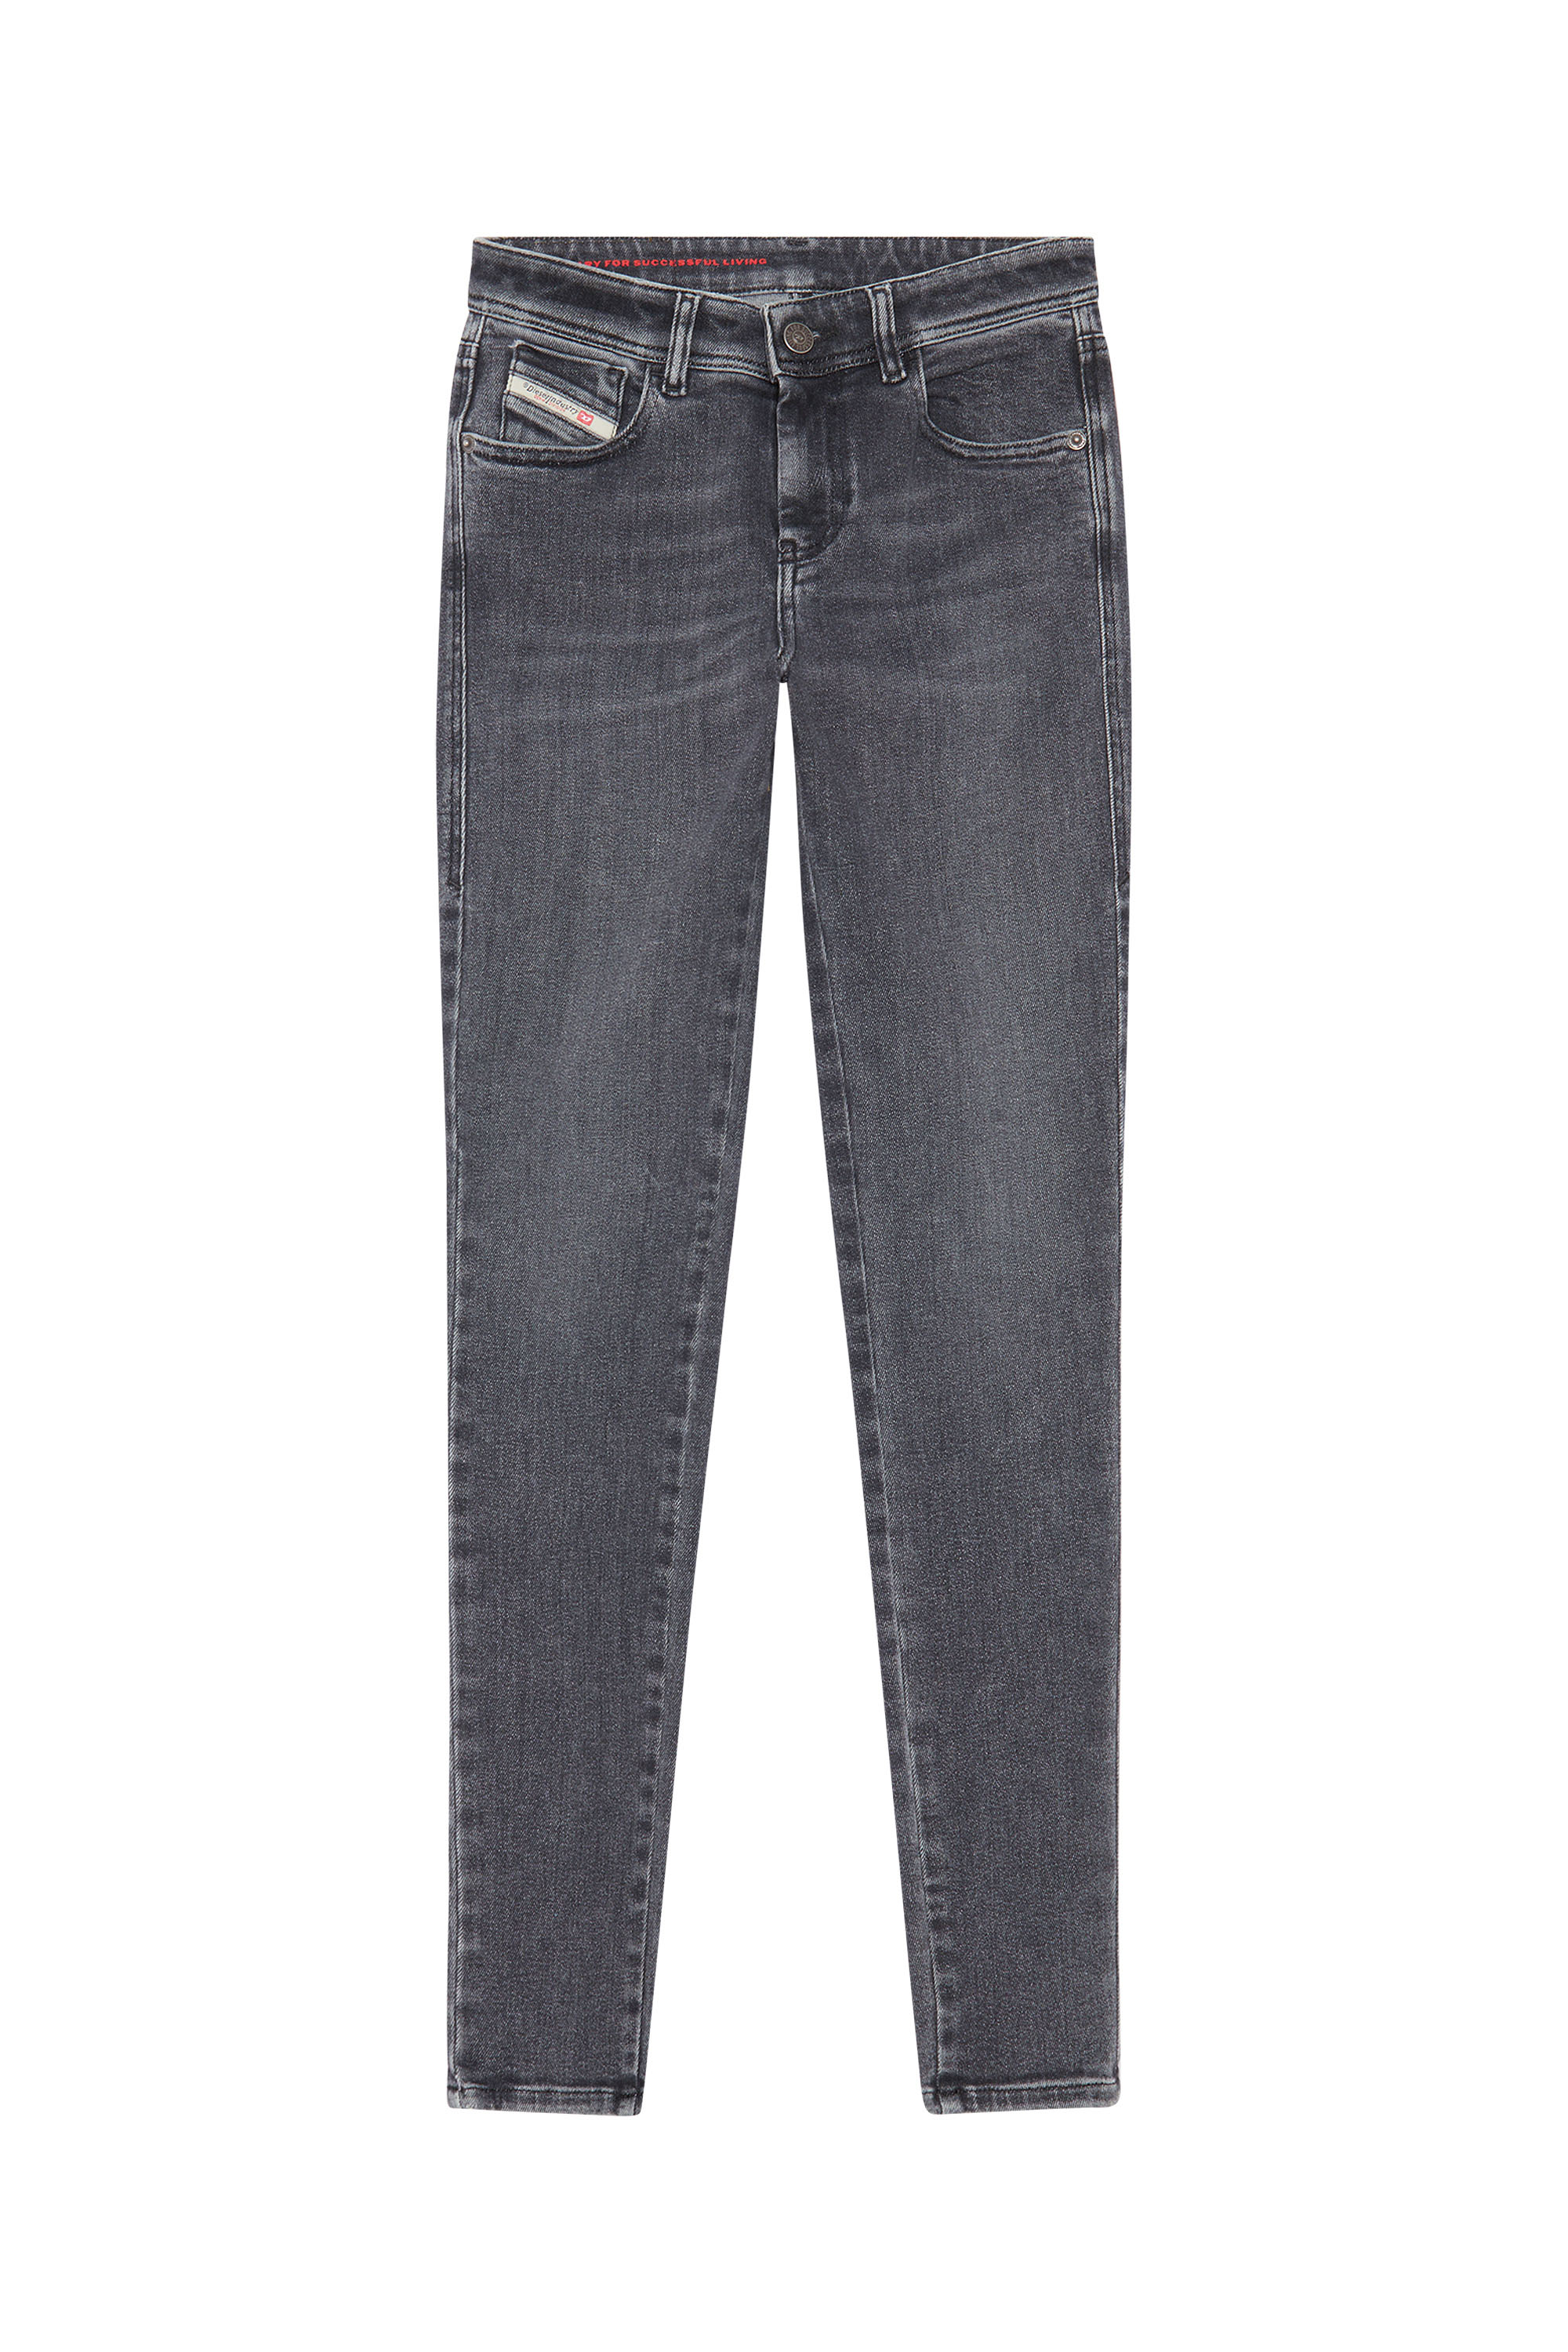 Super skinny Jeans 2017 Slandy 09D61, Black/Dark grey - Jeans